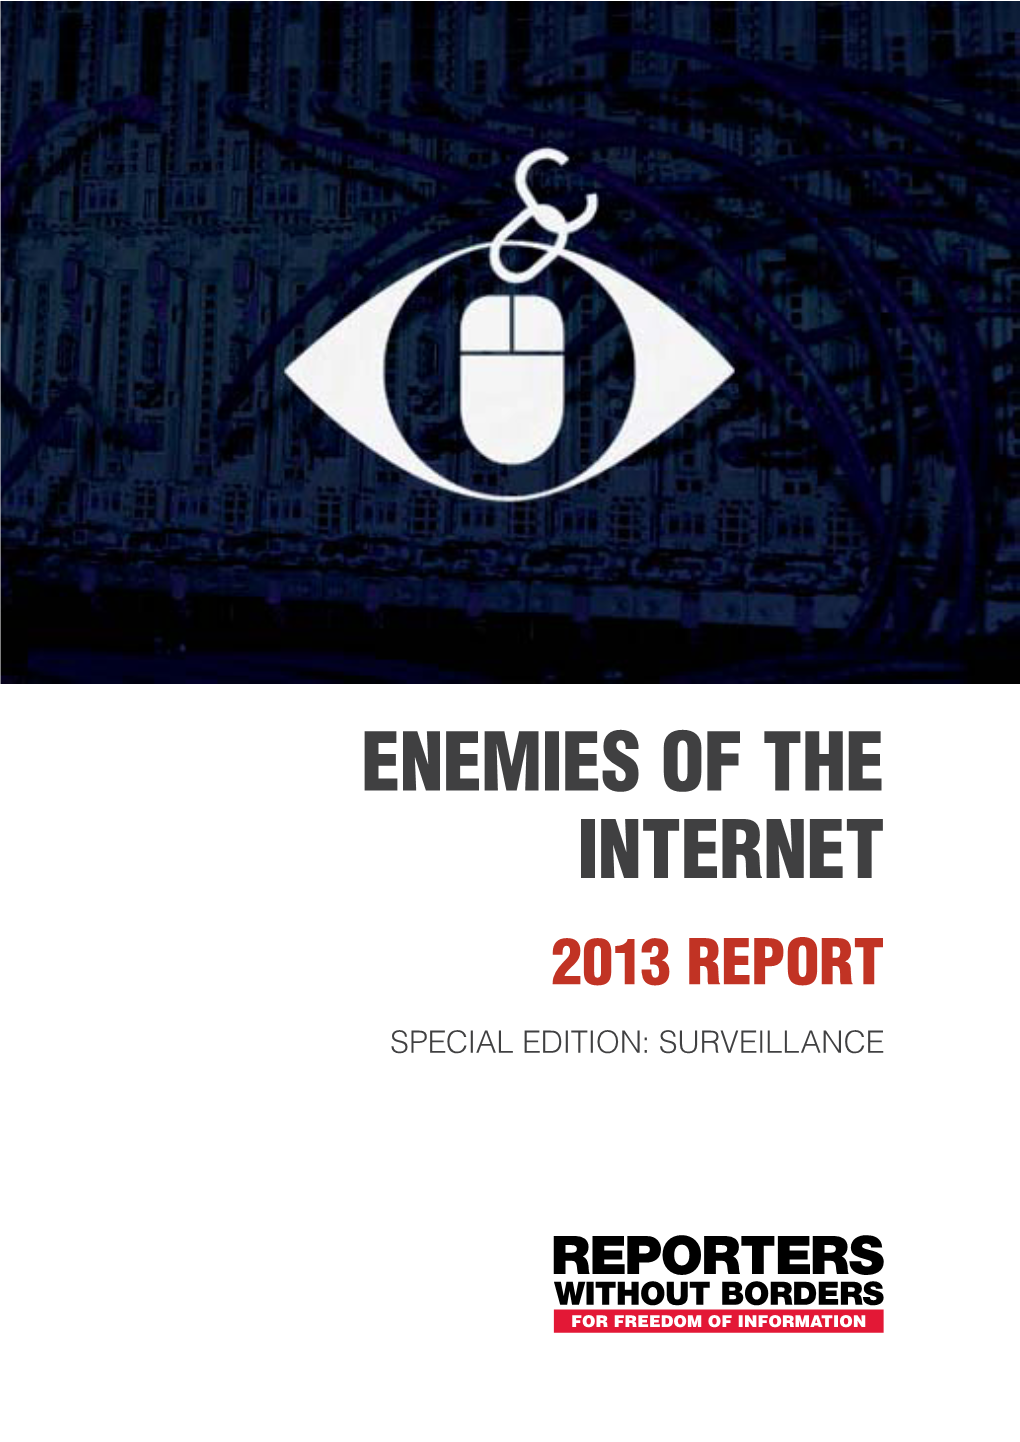 Enemies of the Internet 2013 Report